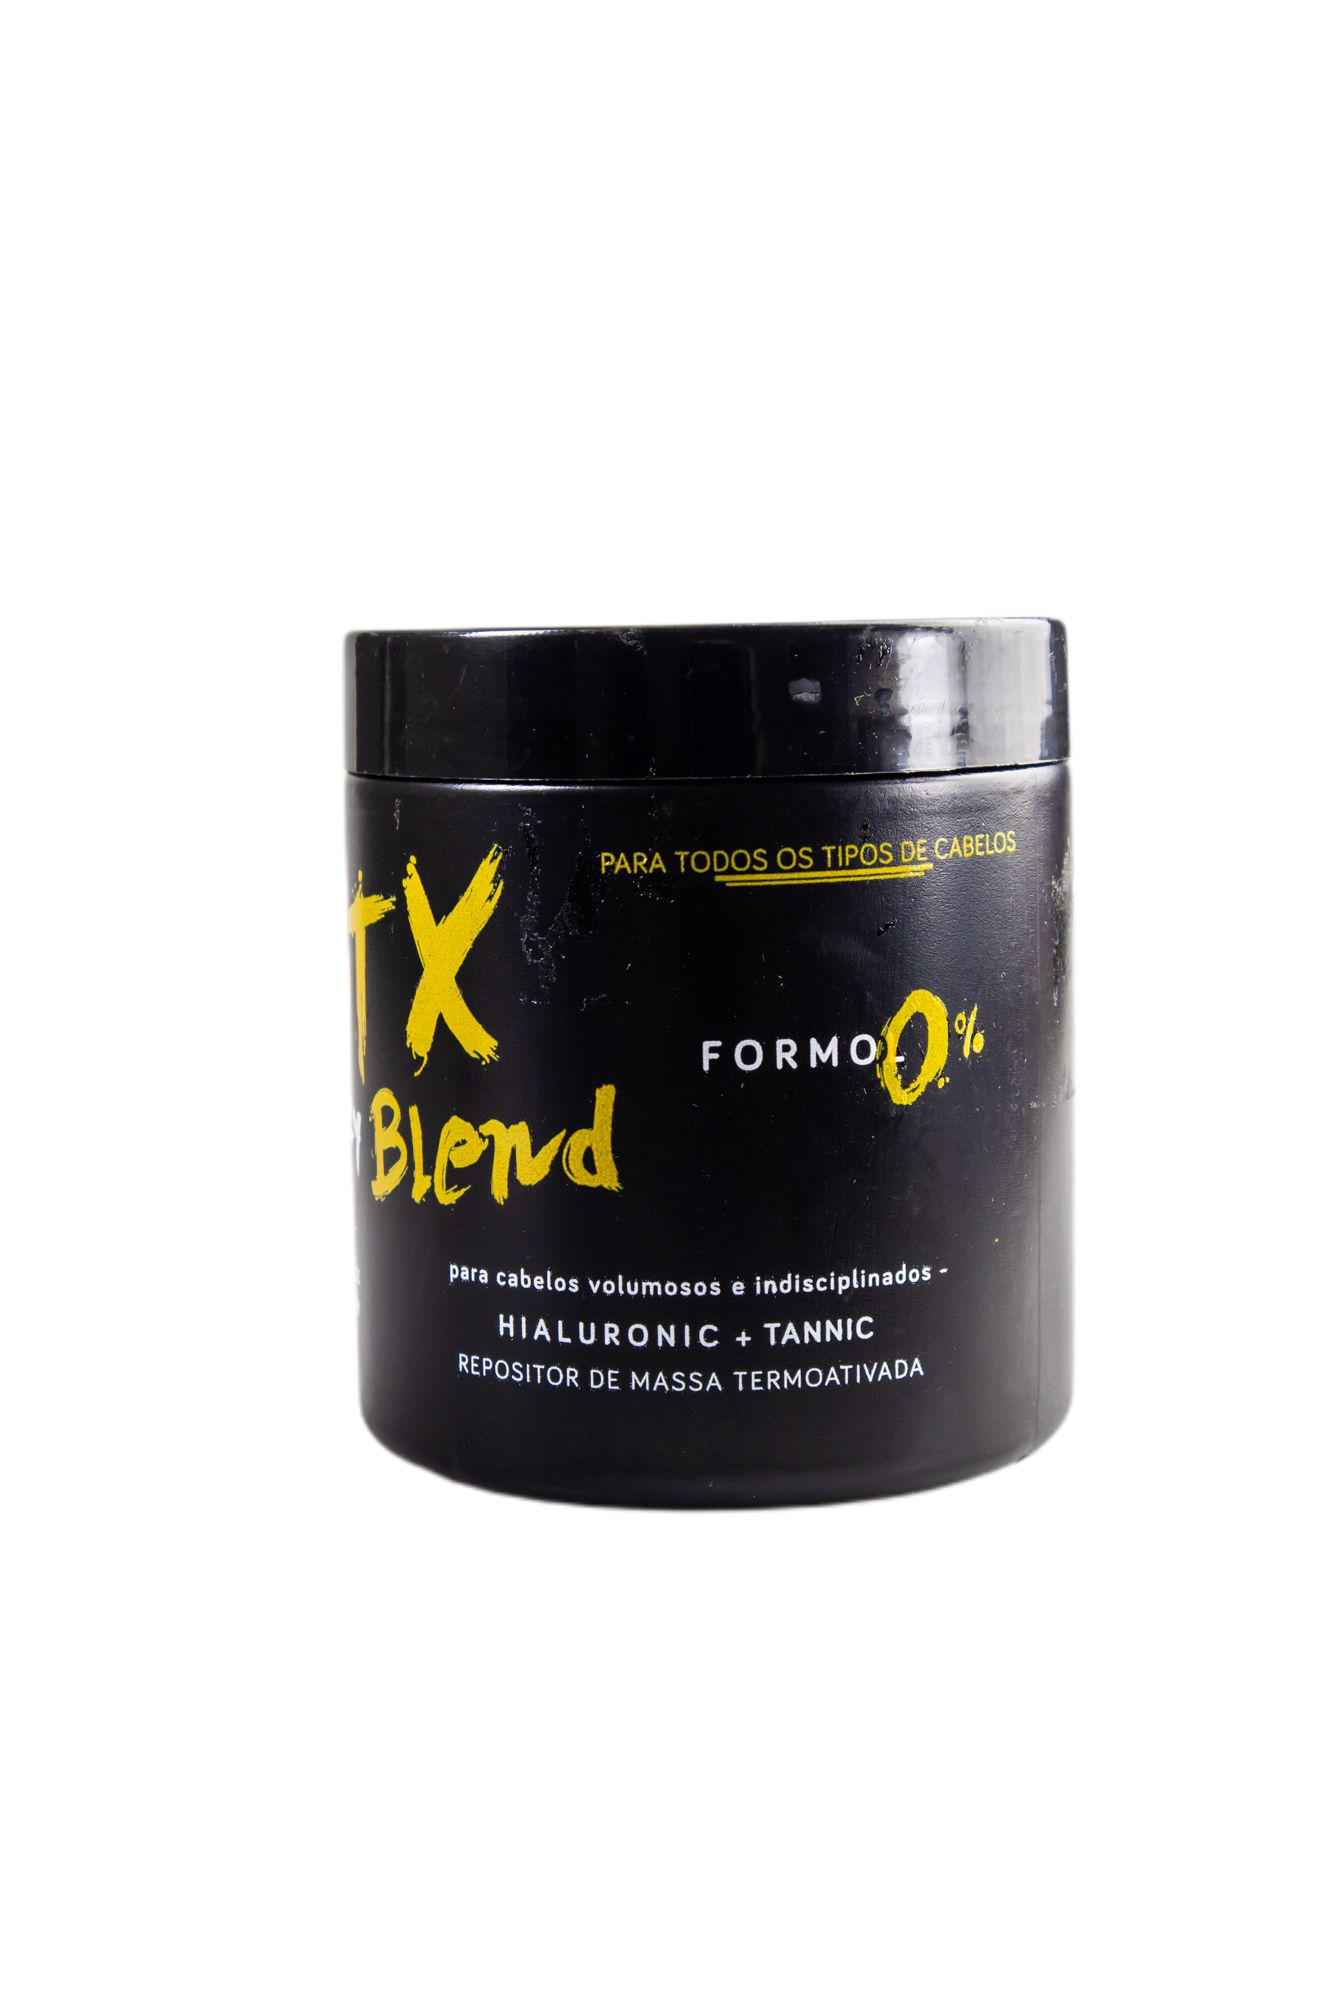 Maxy Blend Hair Mask Mass Replenisher BTX Formol Free Thermoactivated Keratin Mask 500g - Maxy Blend